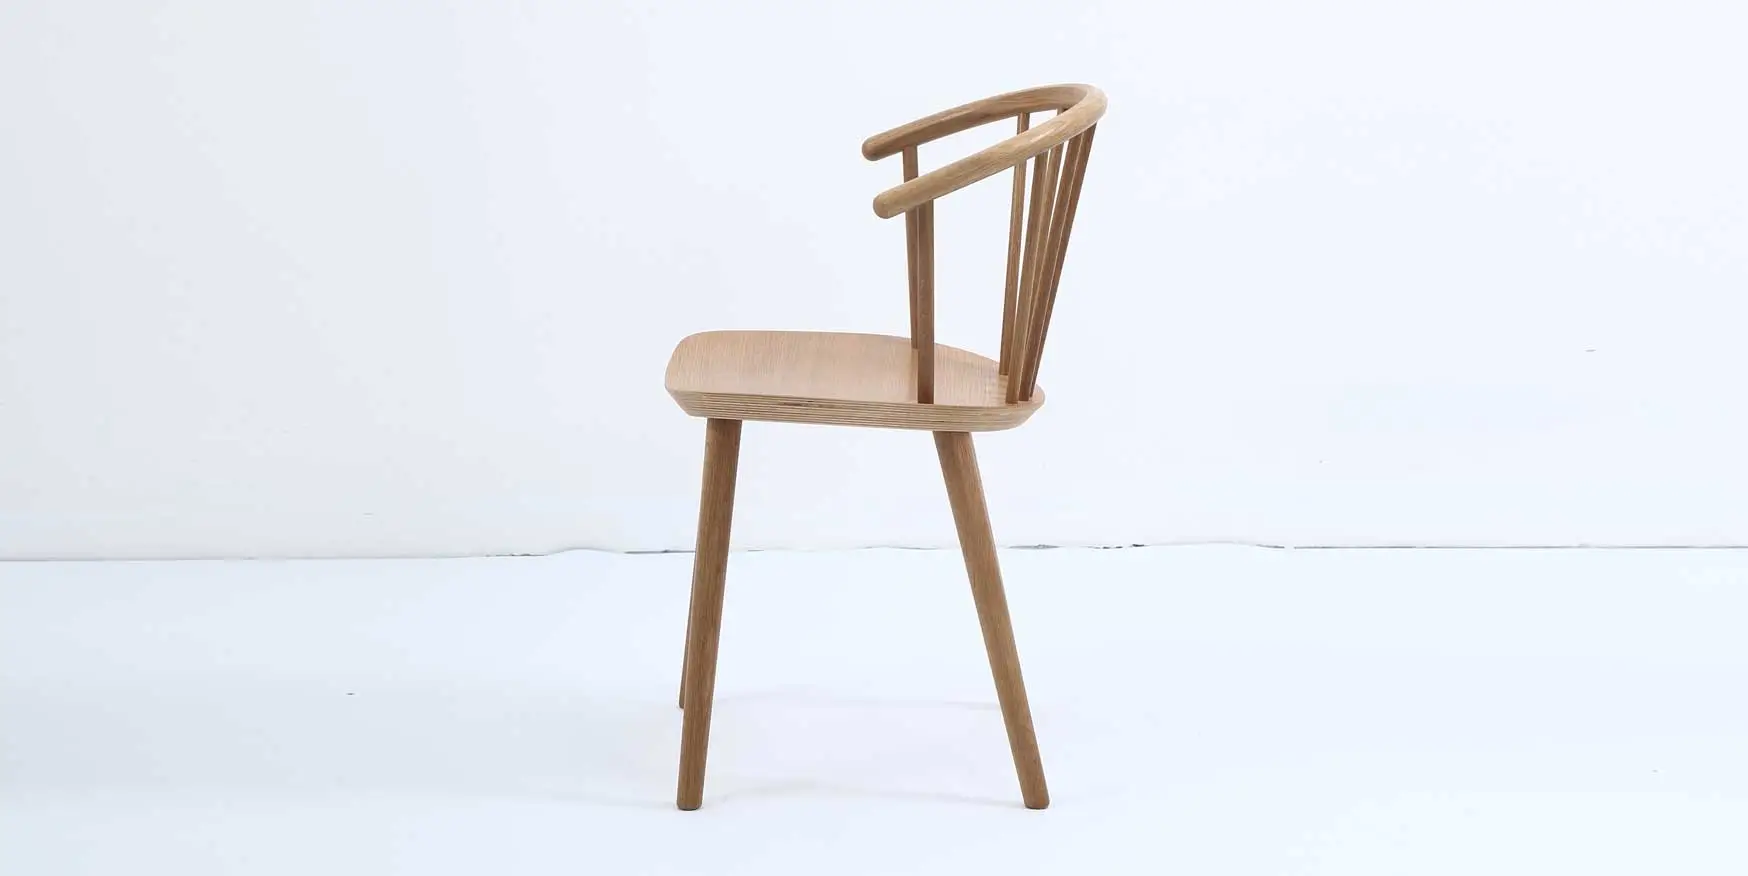 custom dining chairs